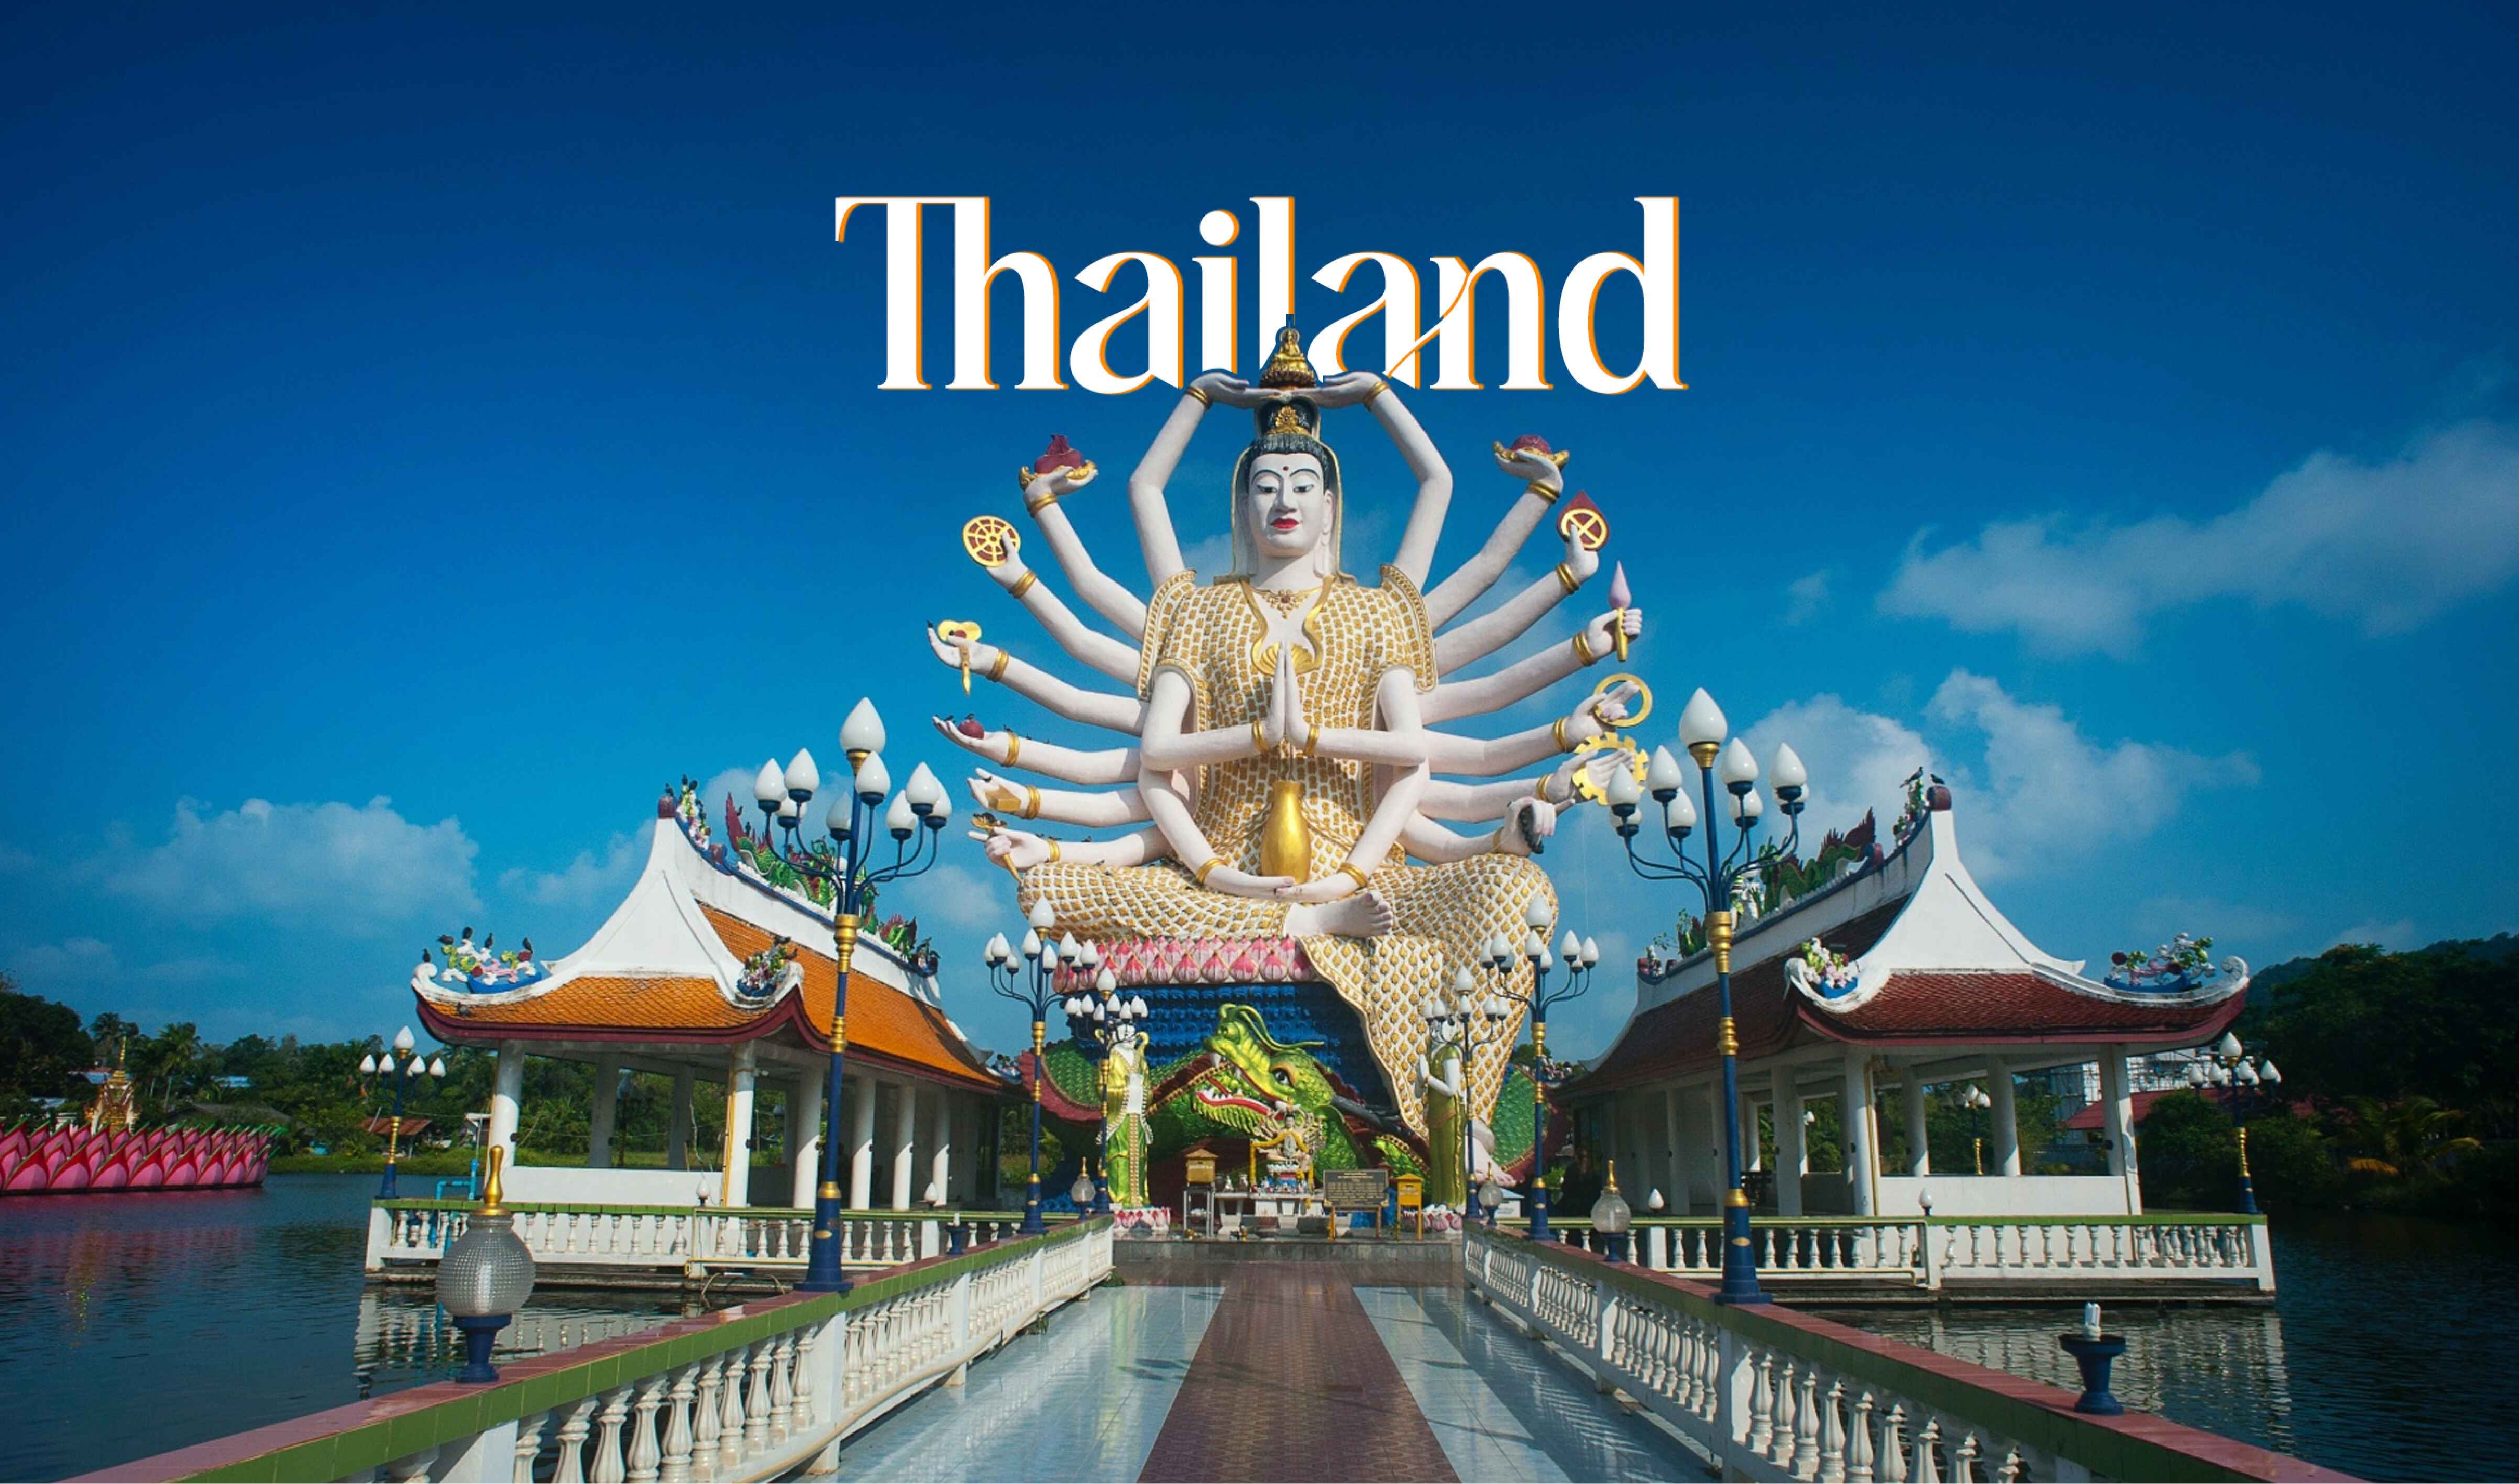 Amazing– Thailand